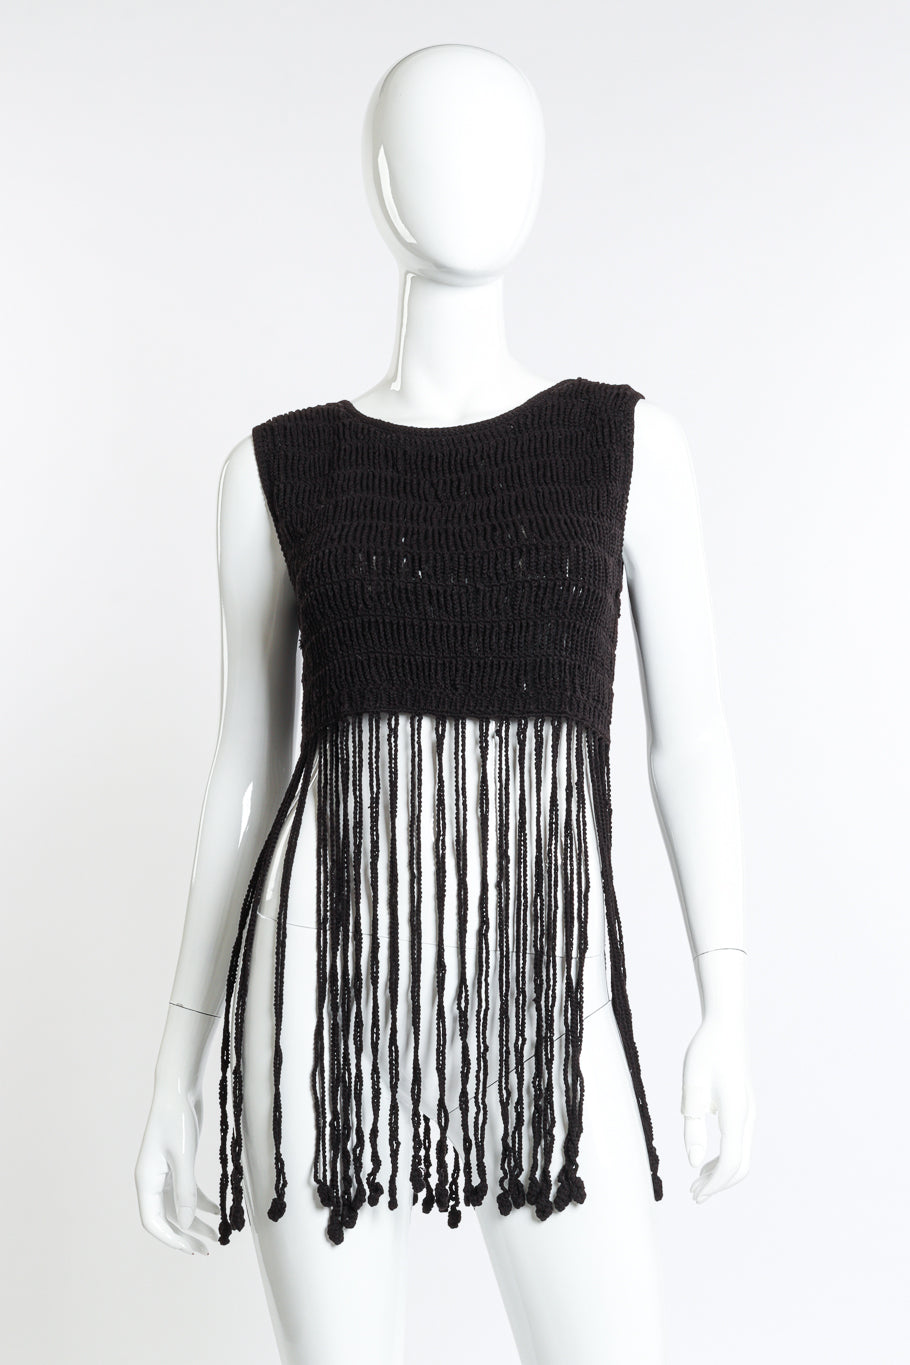 Vintage Vivienne Tam Crochet Fringe Crop Top front on mannequin @recess la